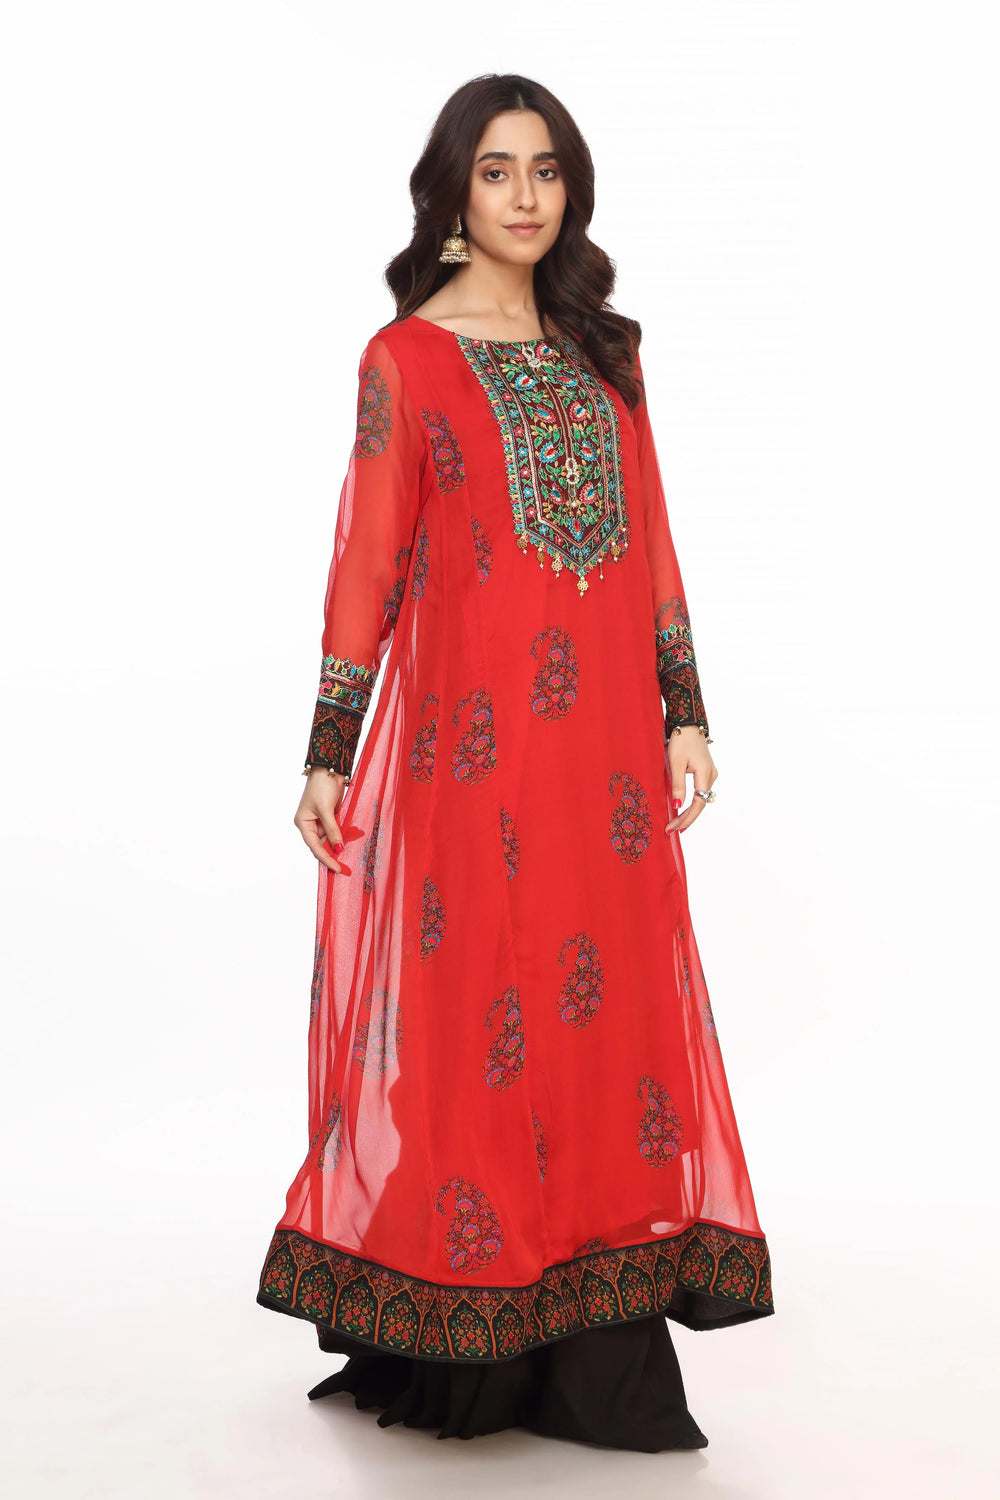 RANG JA Red Ethnic Dress Women Shirt 1PC | FR0709-12